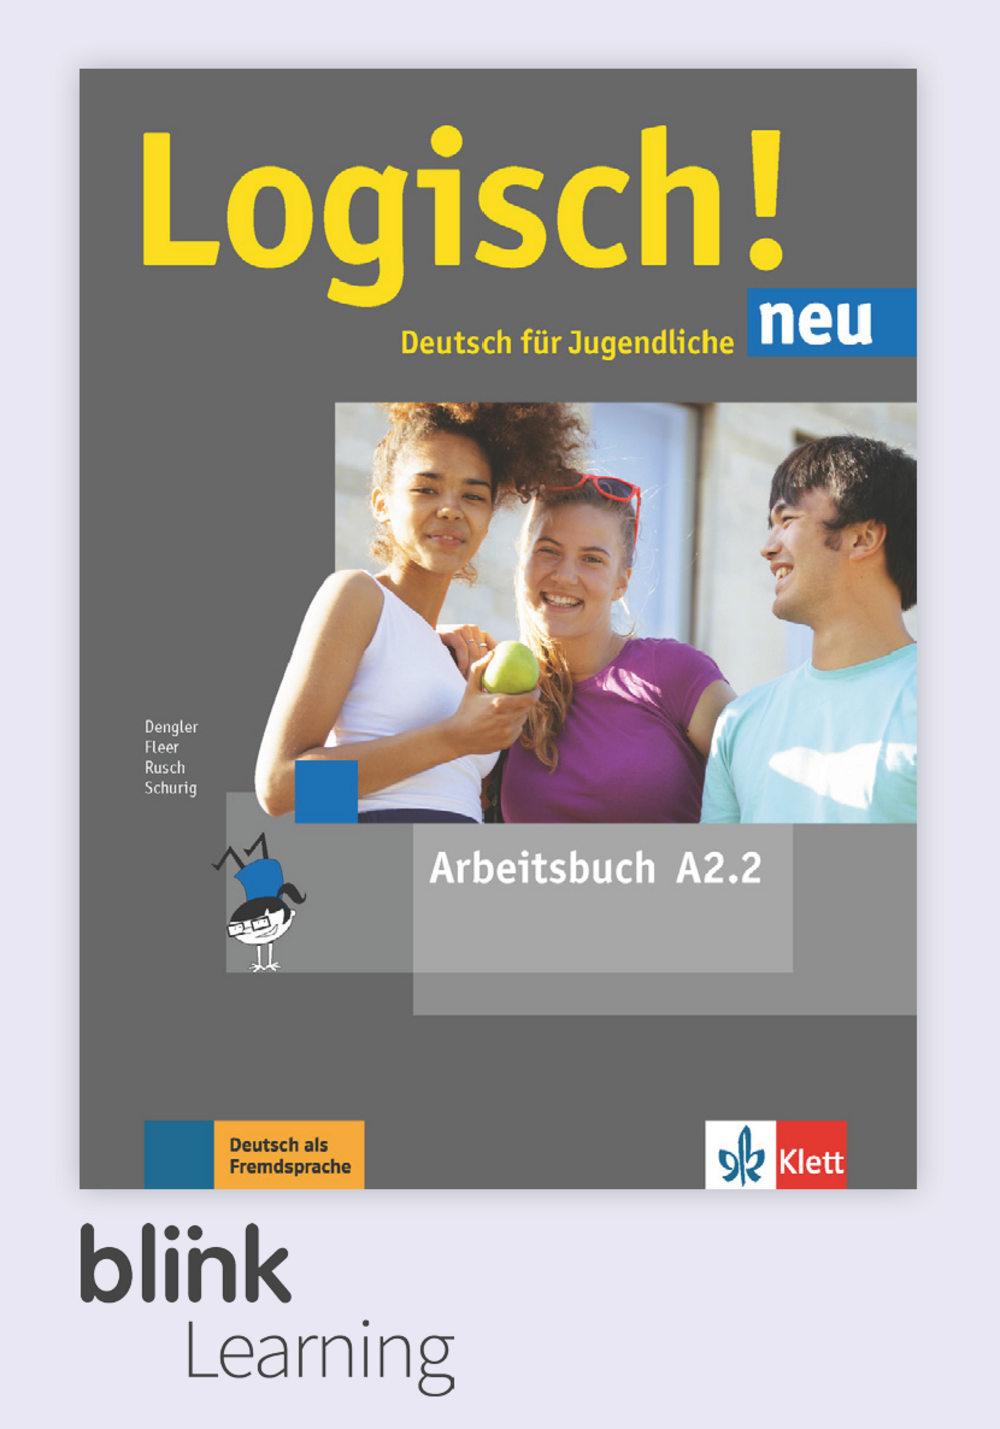 Logisch! NEU A2.2 Digital Arbeitsbuch für Unterrichtende / Цифровая рабочая тетрадь для учителя